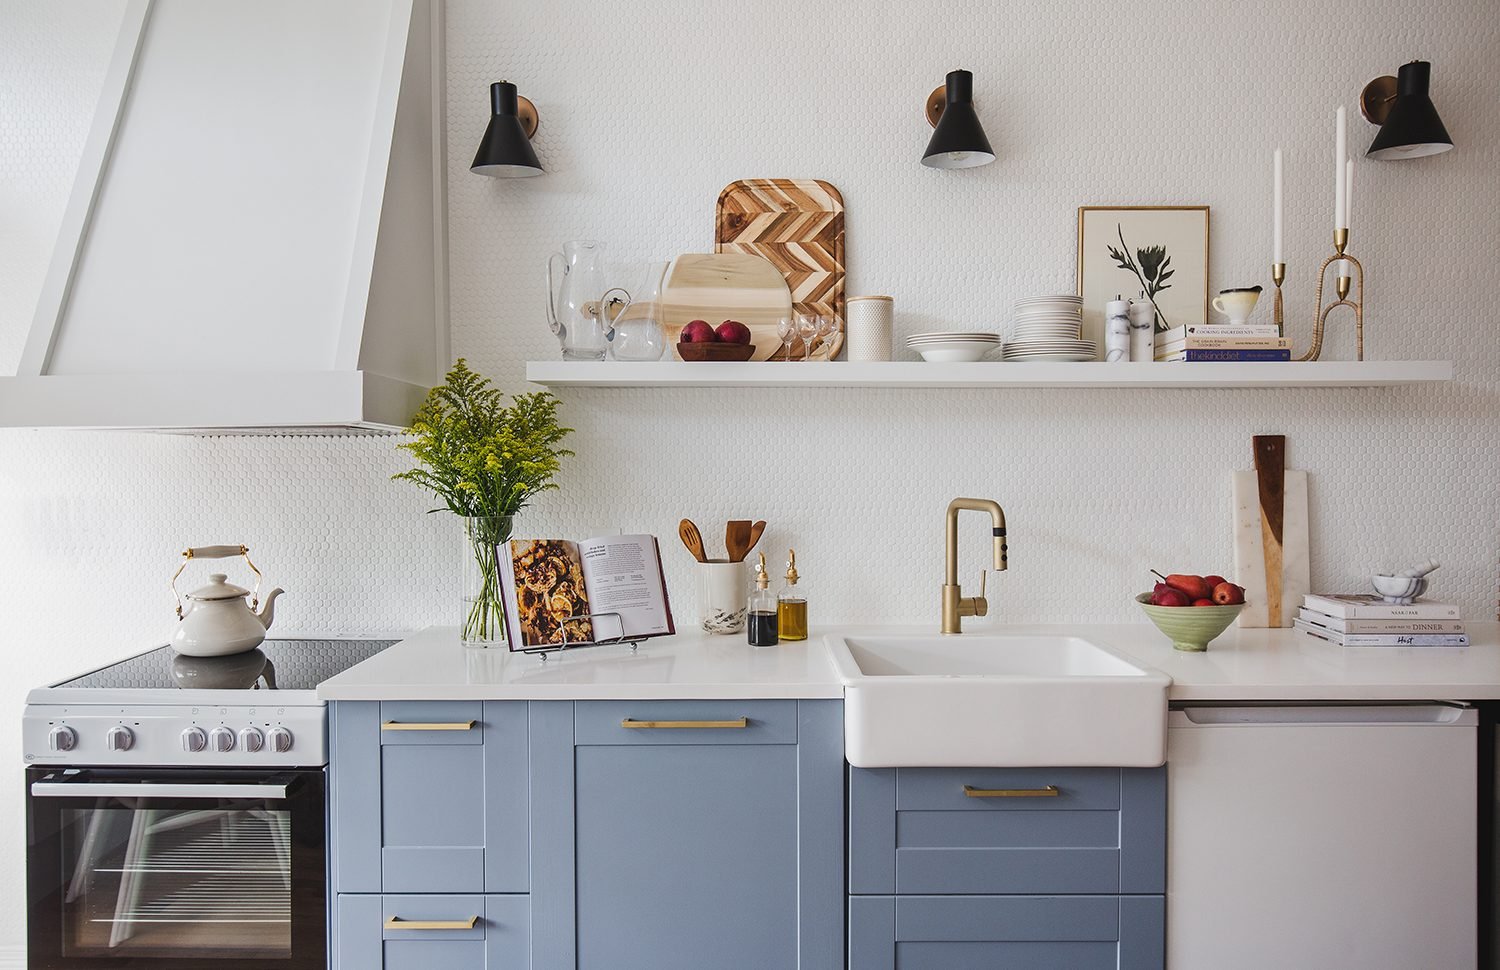 How to warm up an all white kitchen | White kitchen ideas